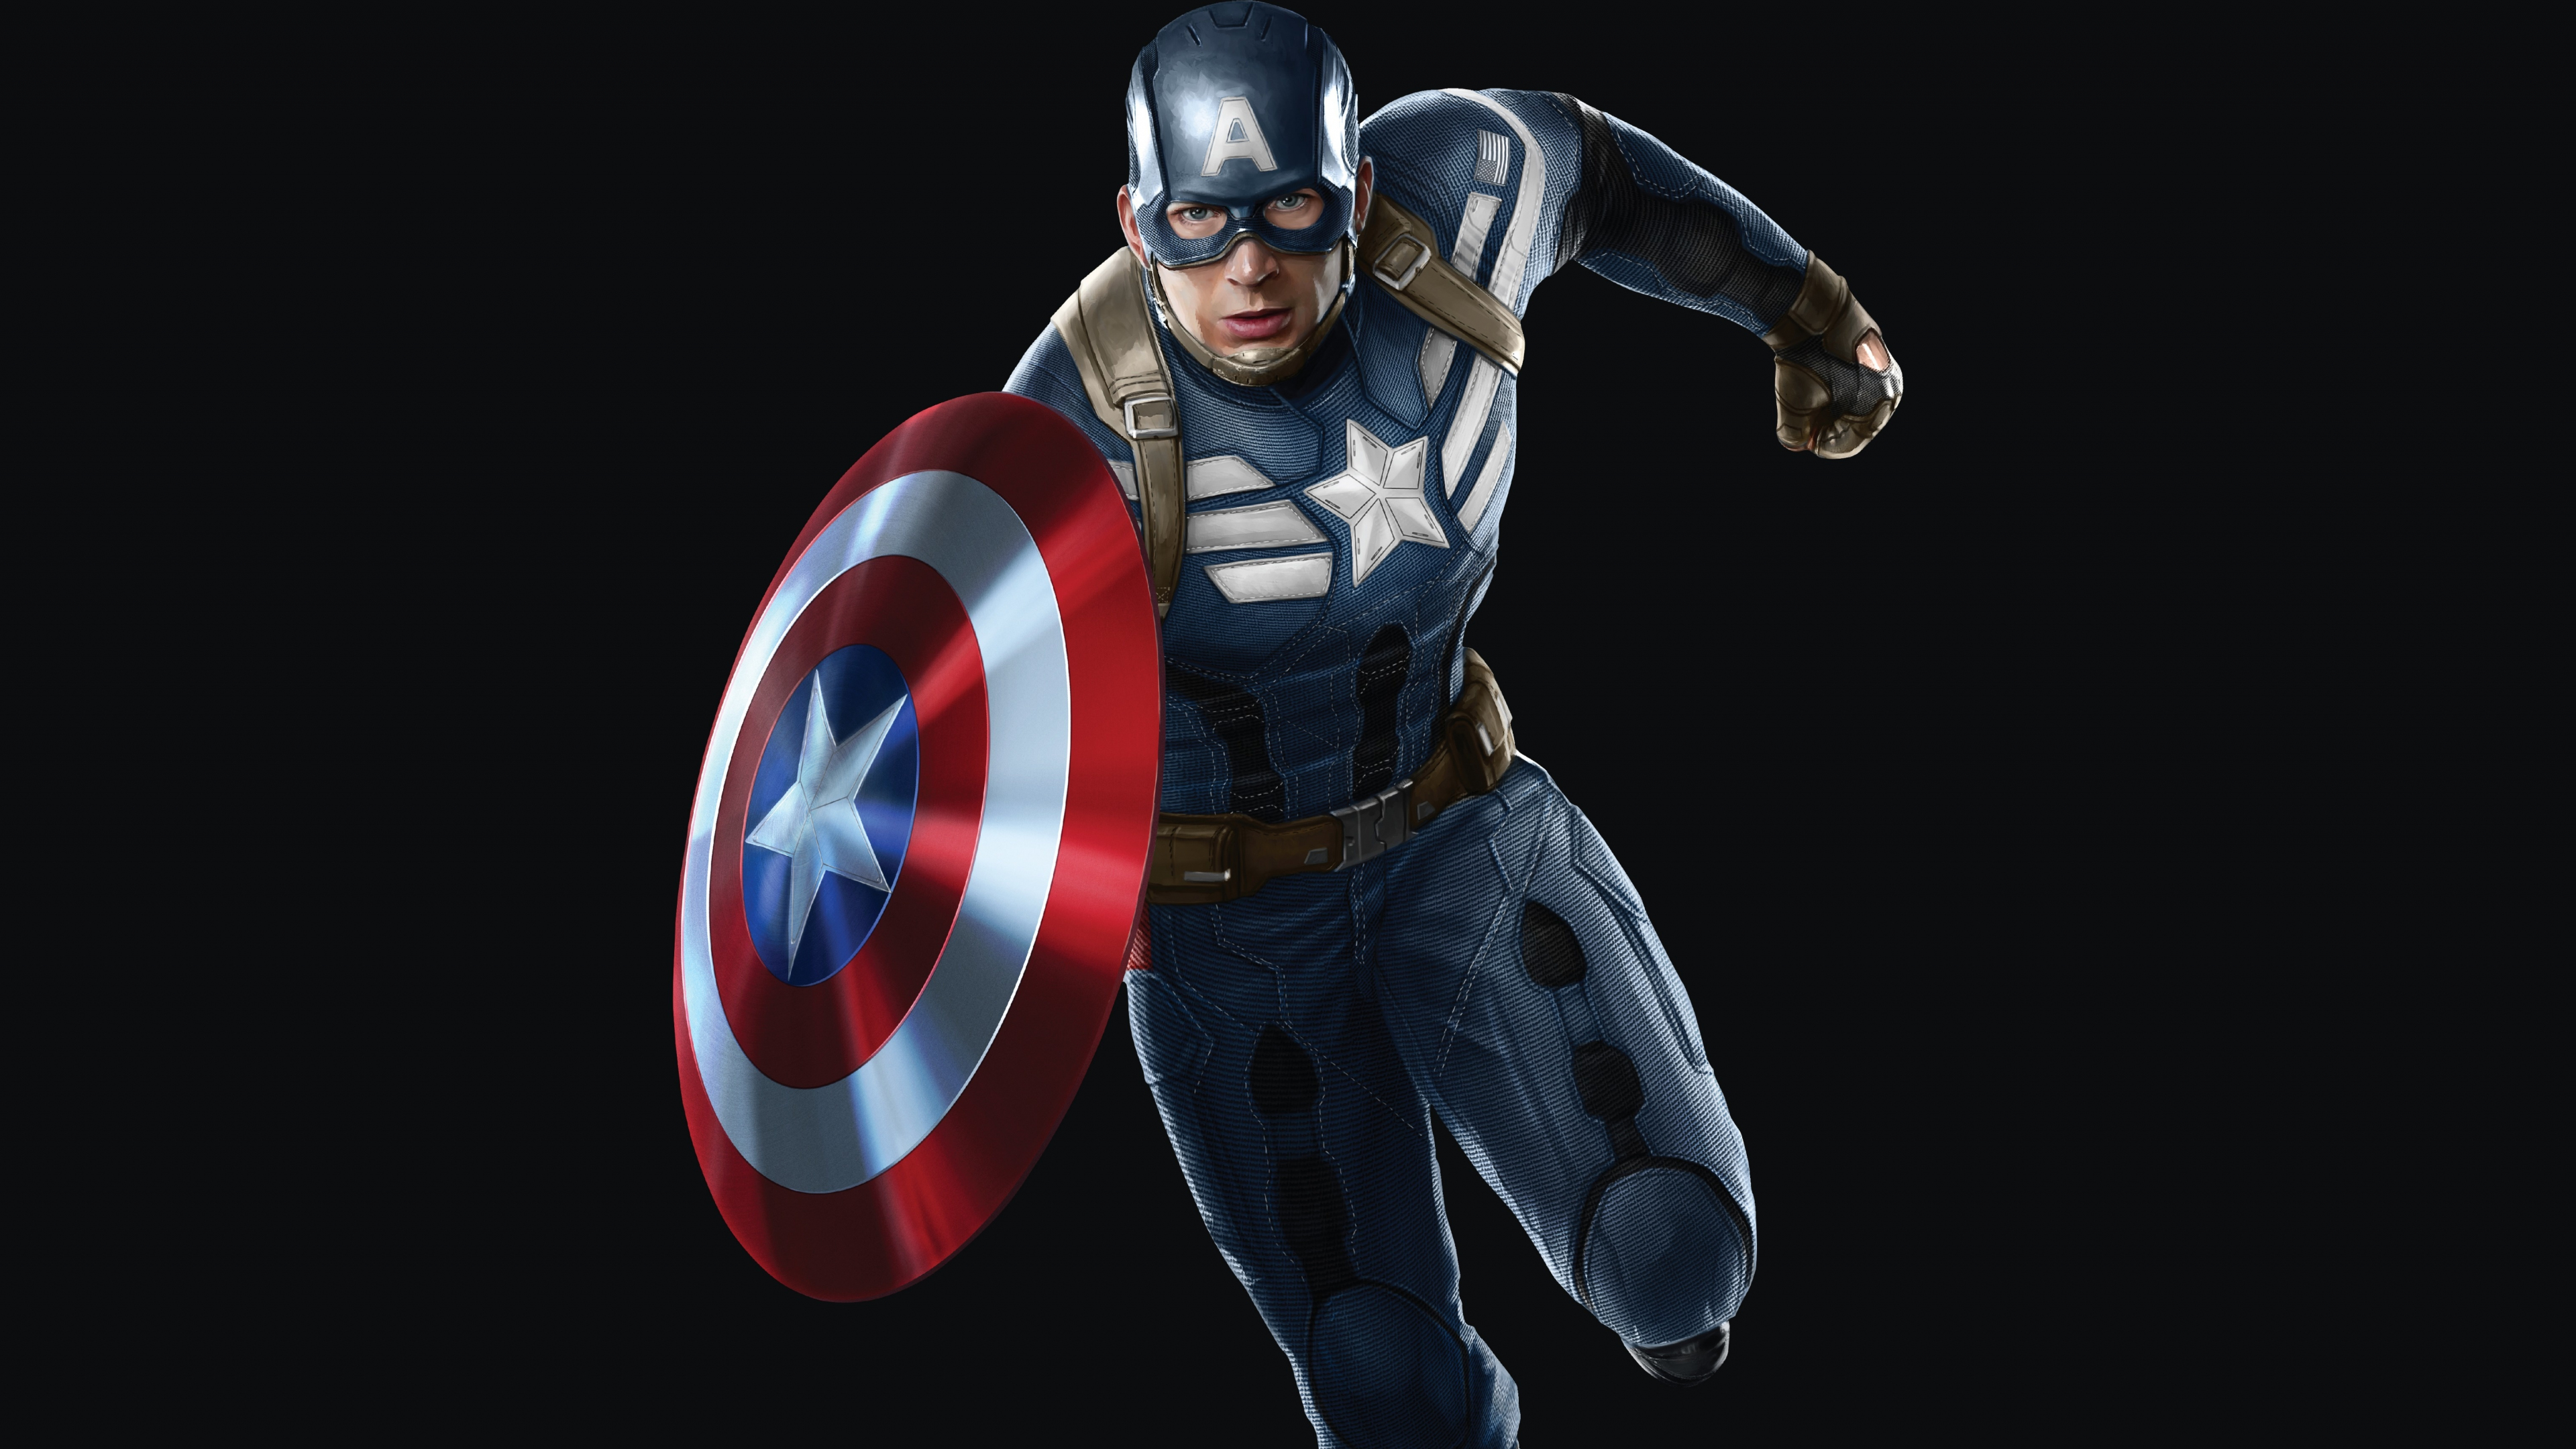 Download wallpaper 3840x2160 captain america, superhero, marvel comics 4k  wallpaper, uhd wallpaper, 16:9 widescreen 3840x2160 hd background, 5144